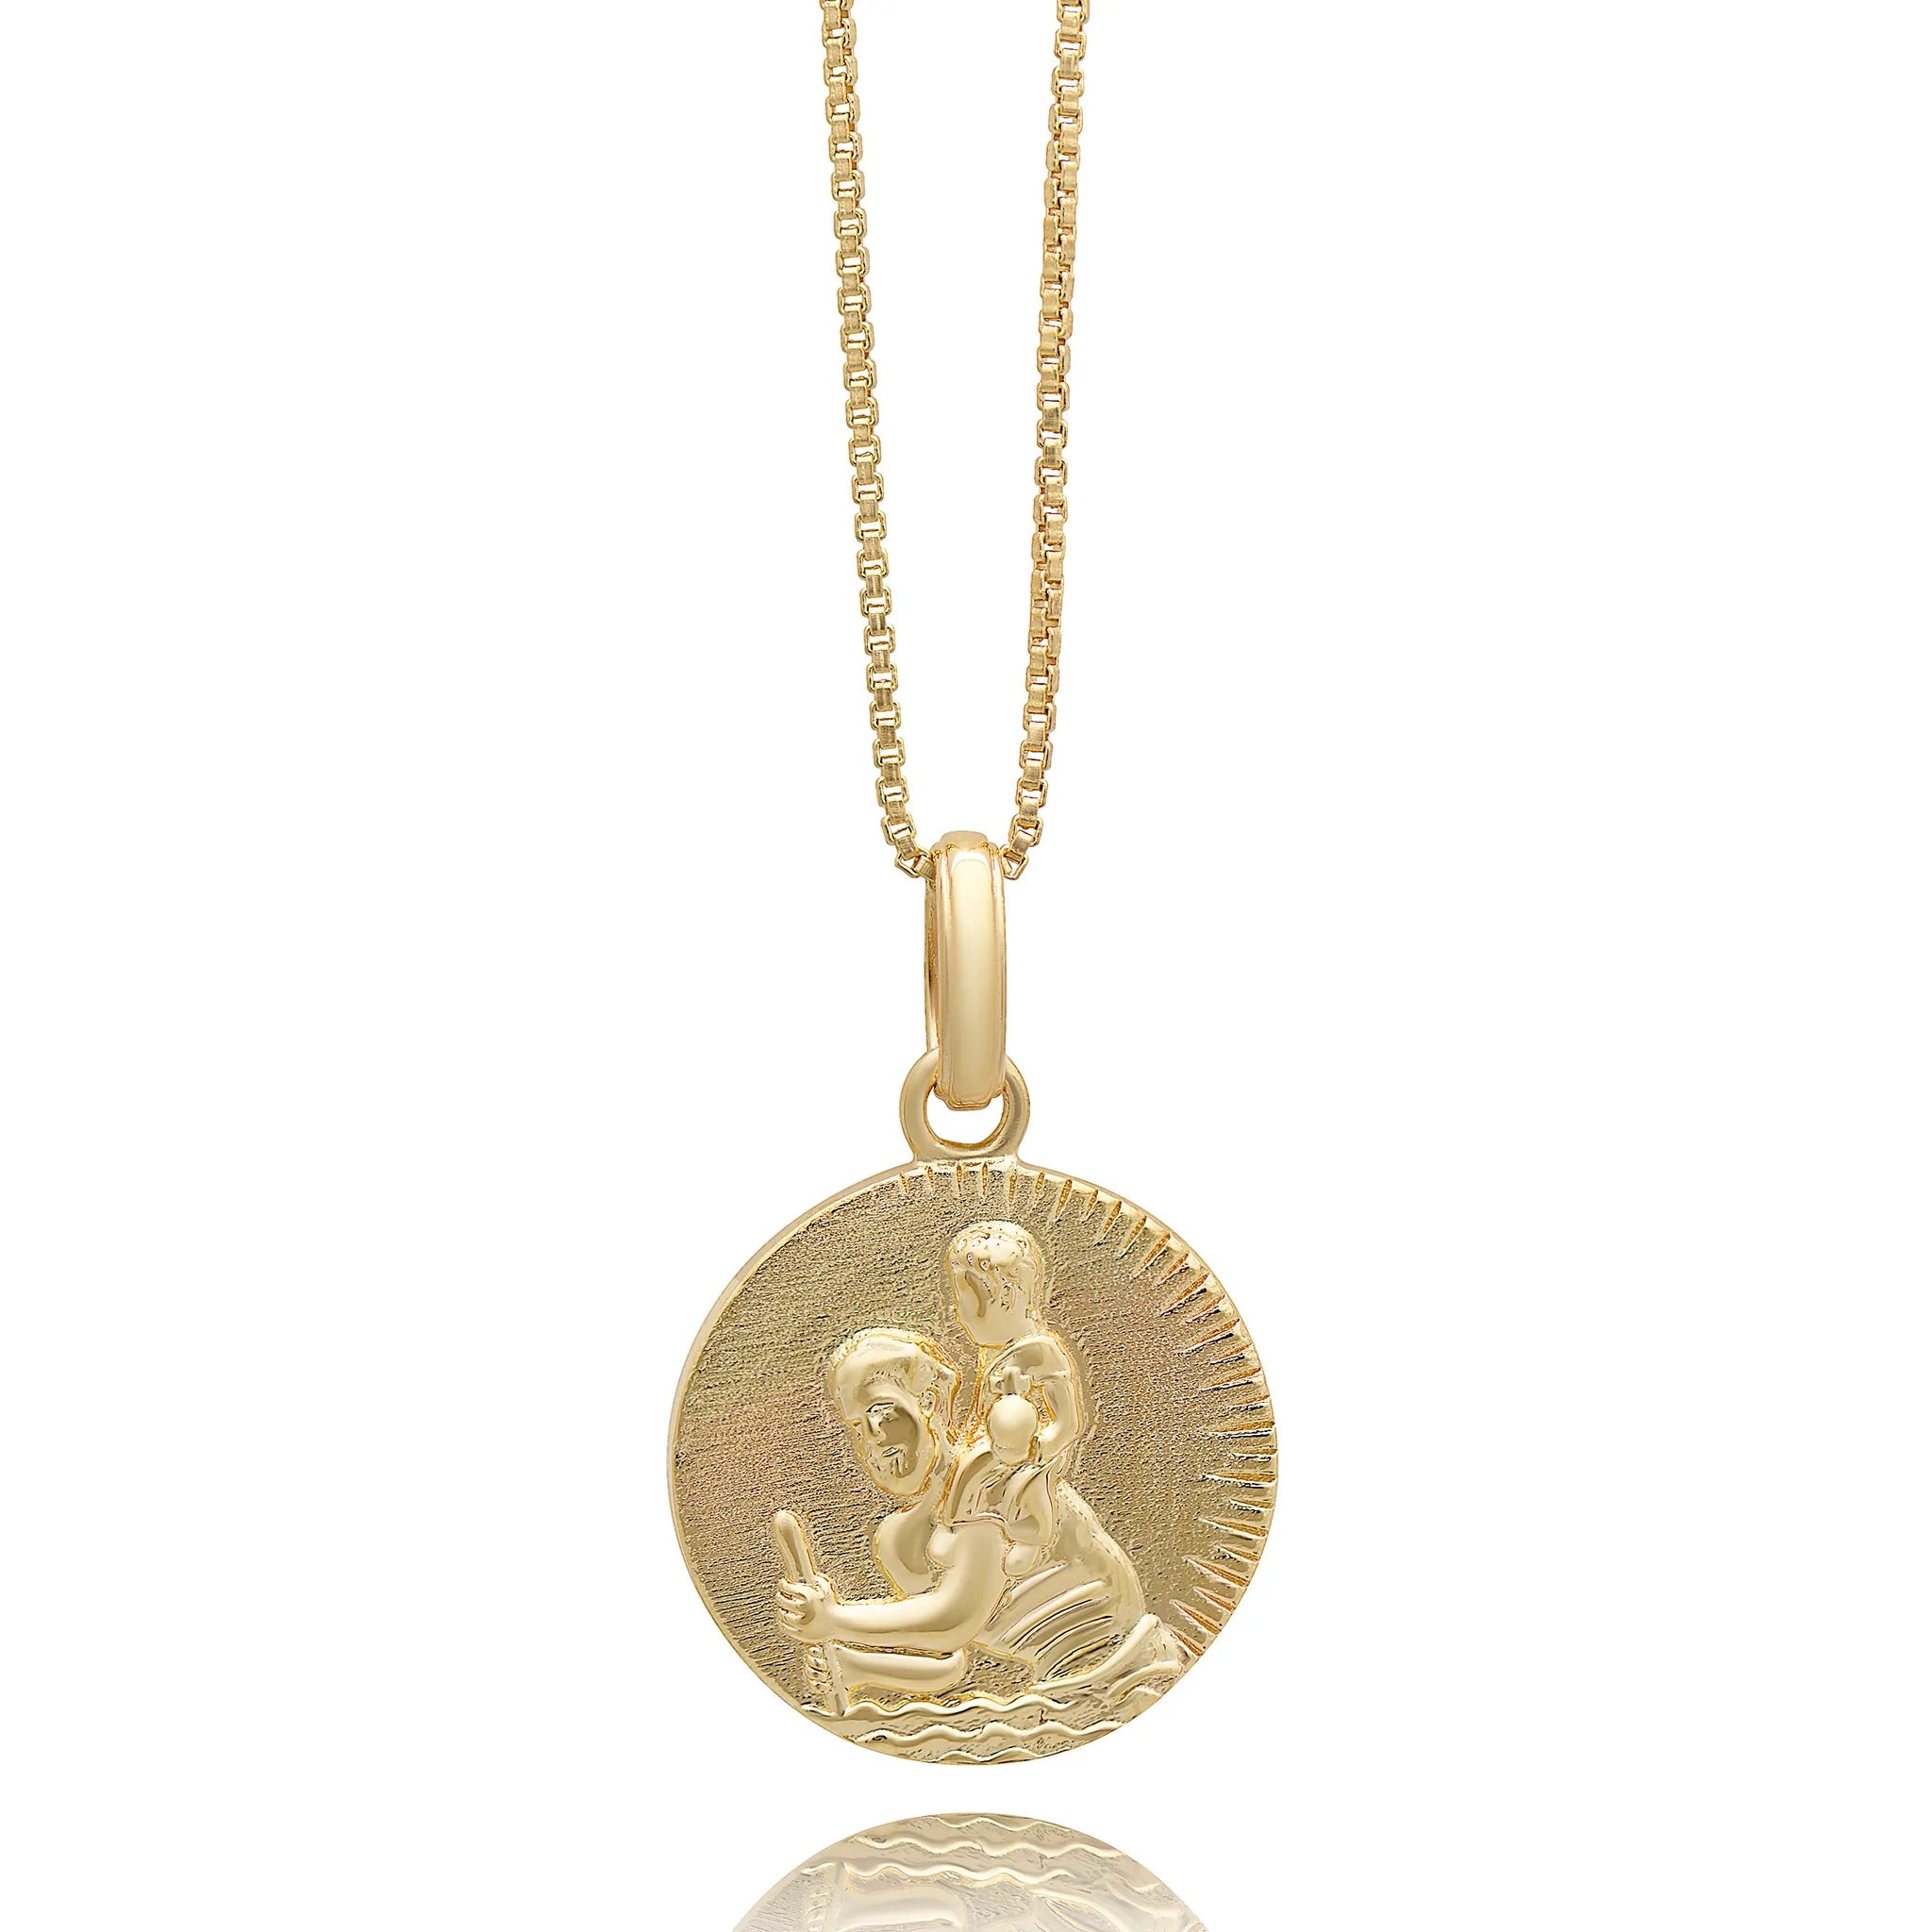 Vintage French St Christopher Pendant, Patron Saint of Travel - Etsy | St  christopher pendant, French vintage, St christopher necklace